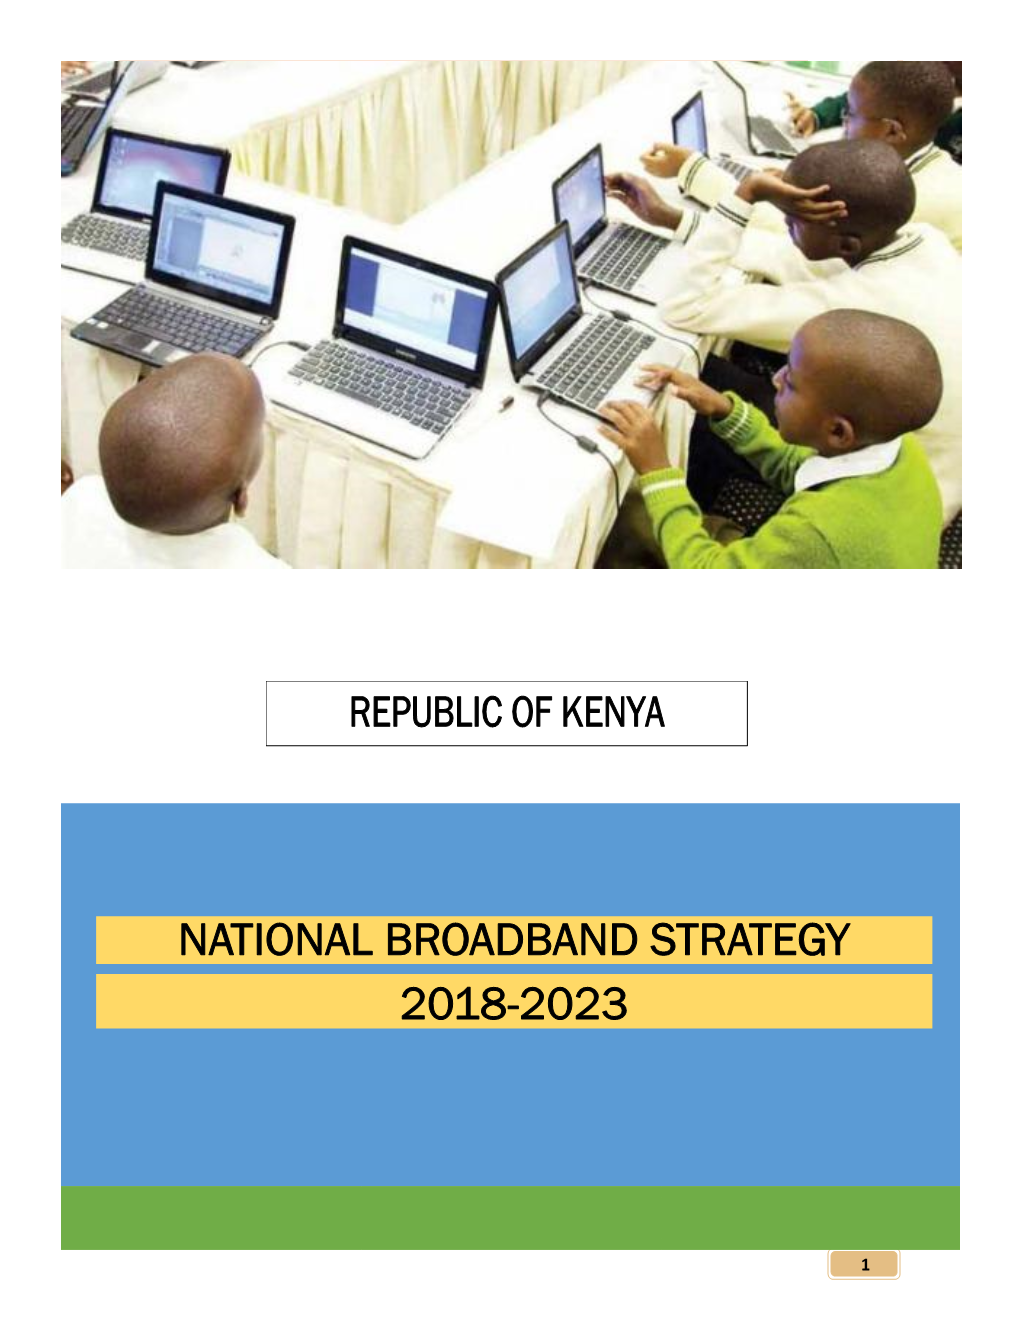 National Broadband Strategy 2018-2023